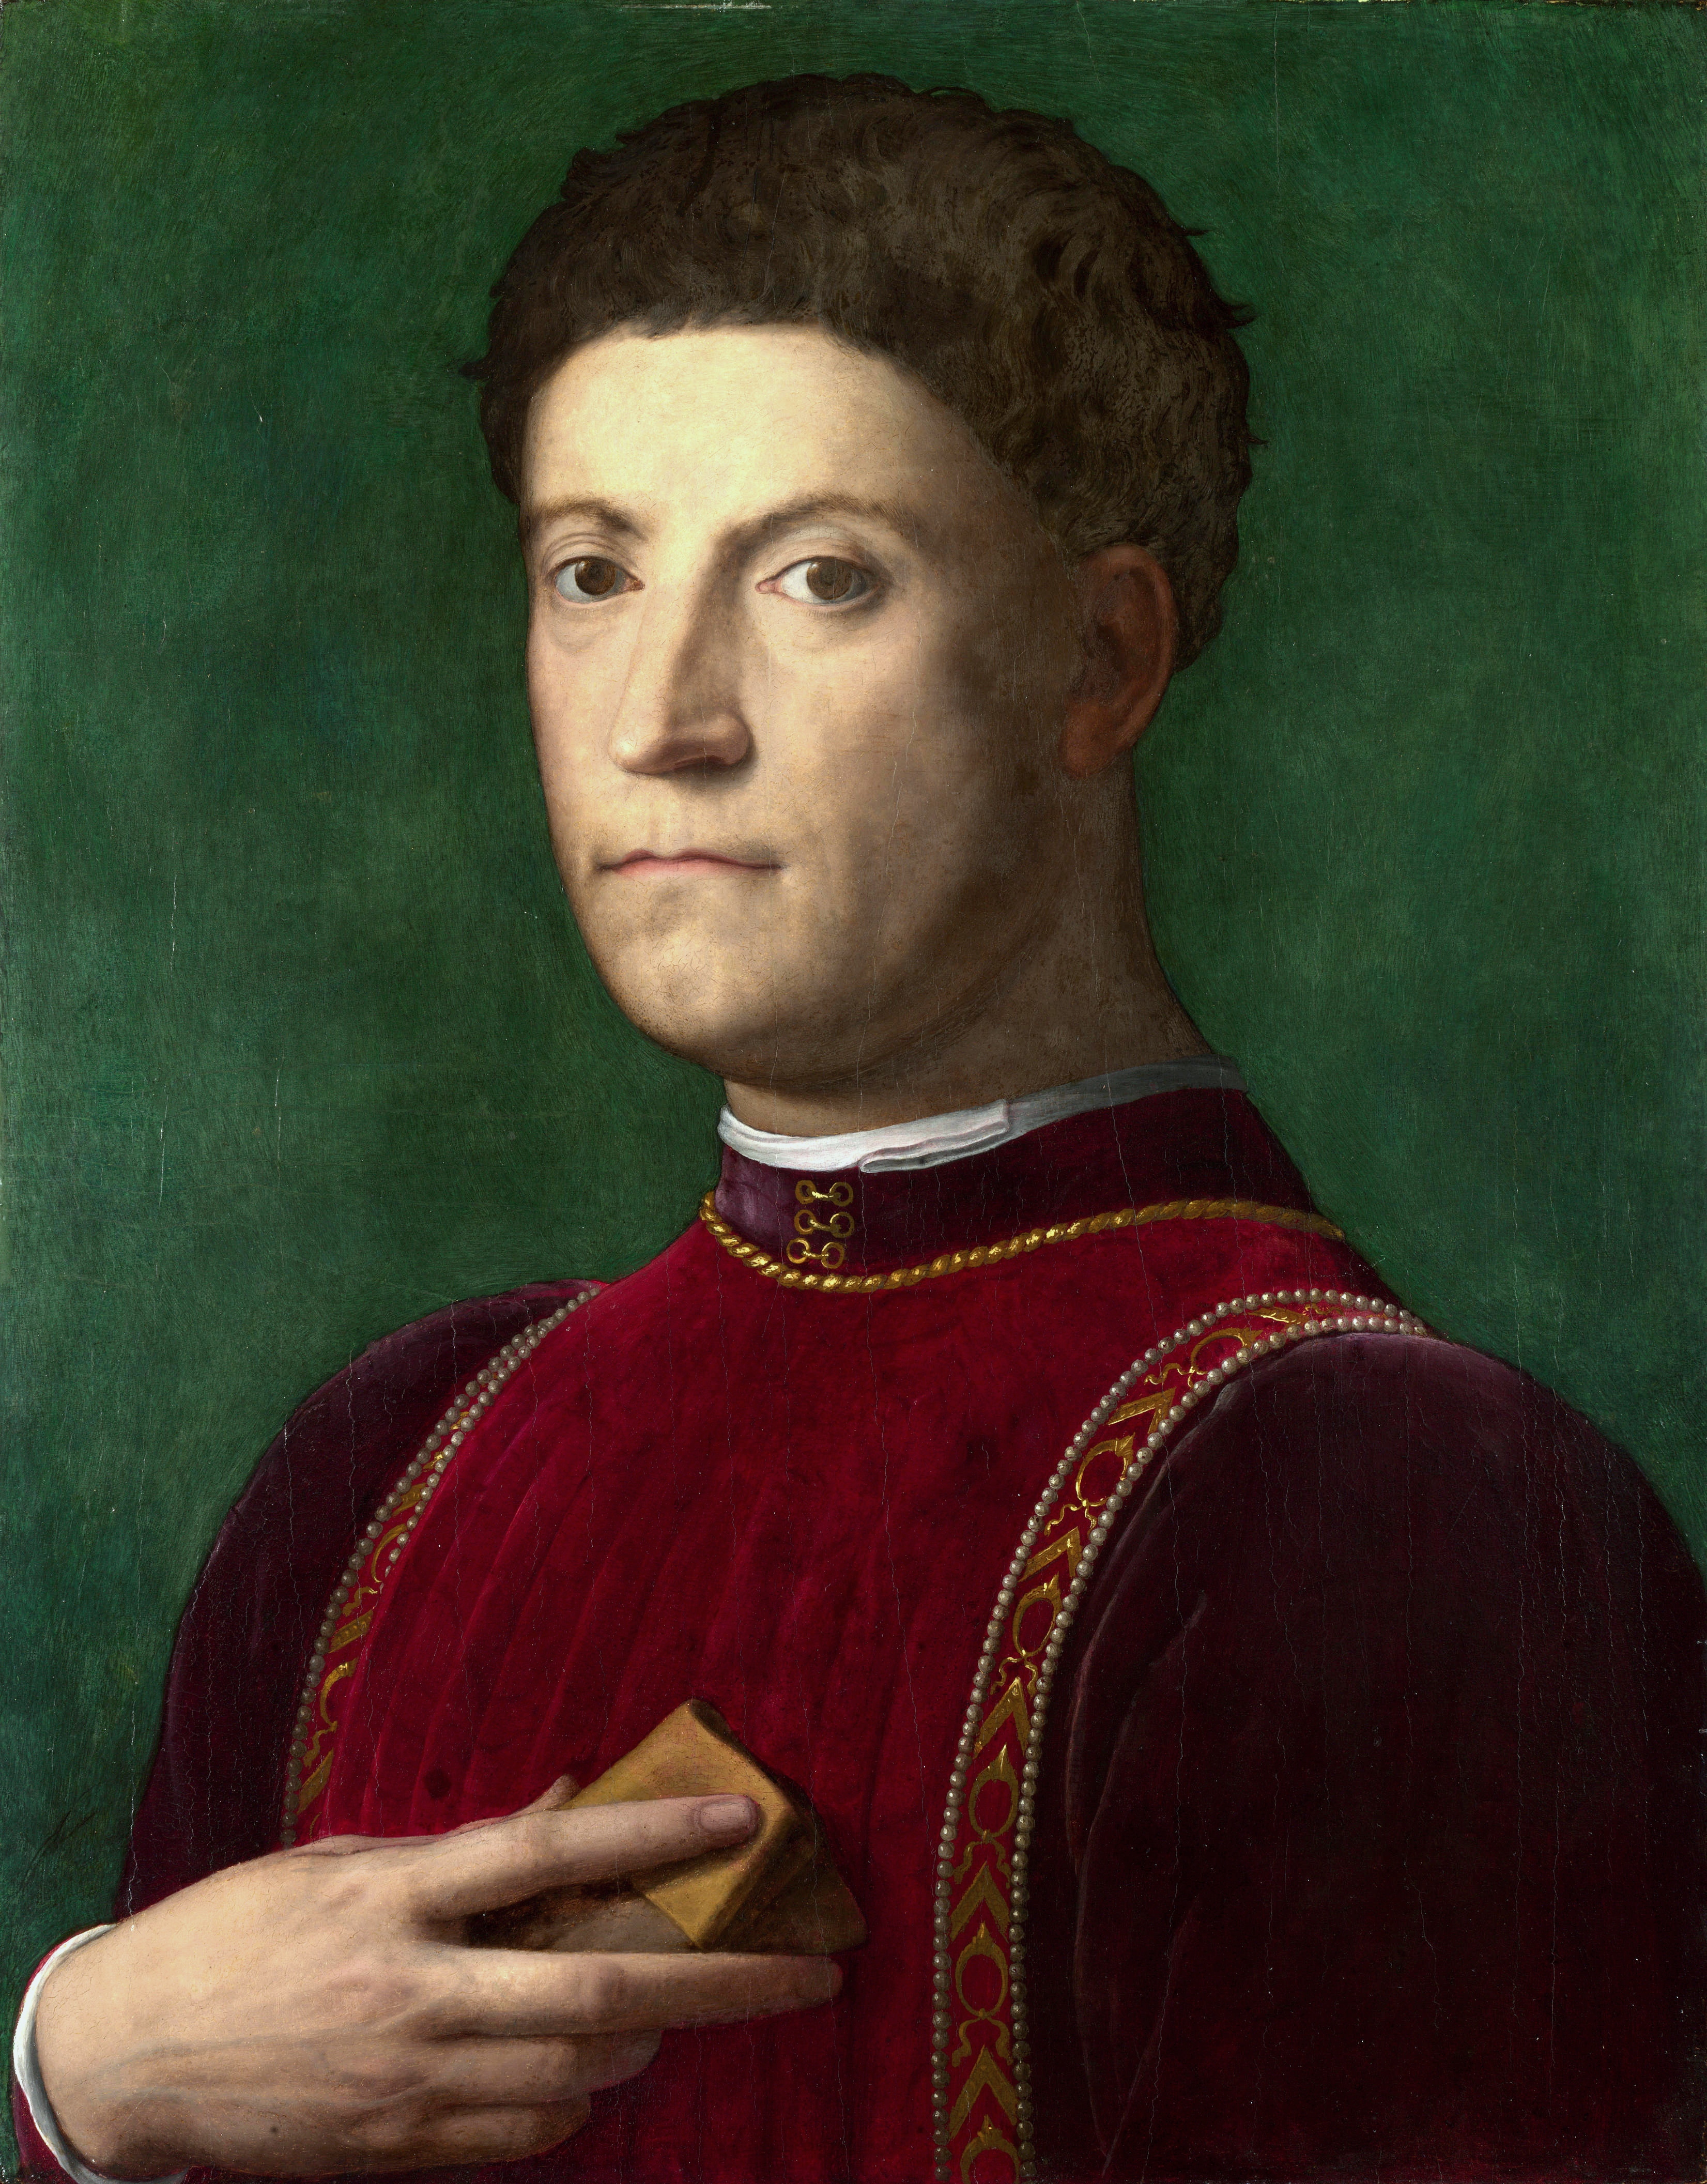 Cosimo Medici